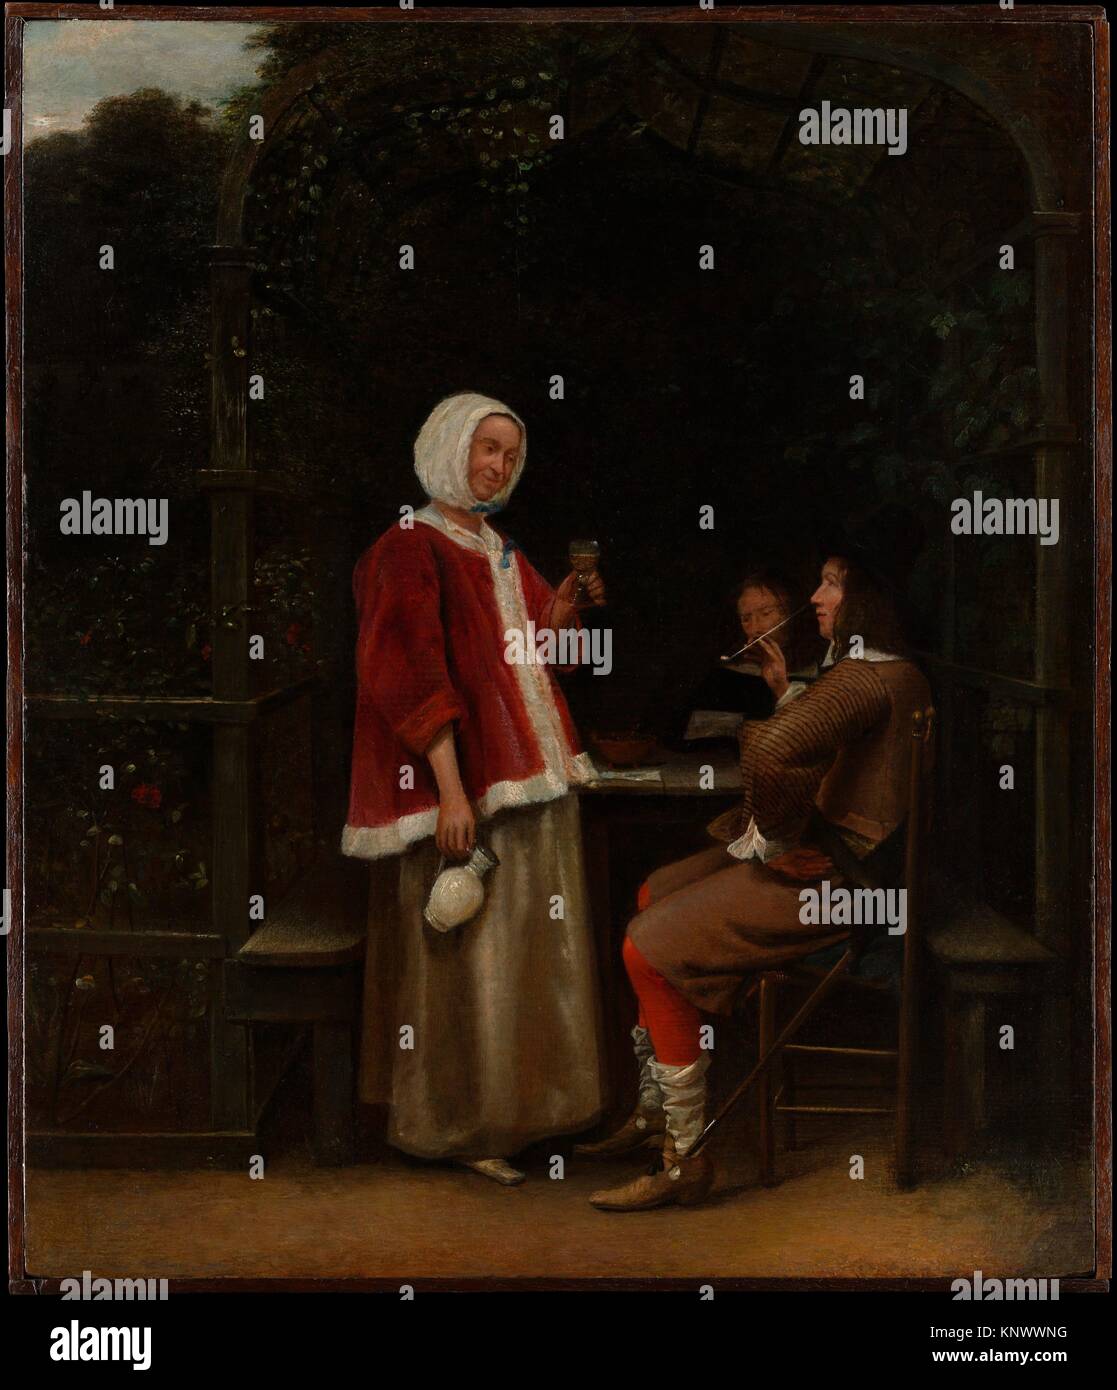 A Woman and Two Men in an Arbor. Artist: Pieter de Hooch (Dutch, Rotterdam 1629-1684 Amsterdam); Date: ca. 1657-58; Medium: Oil on wood; Dimensions: Stock Photo